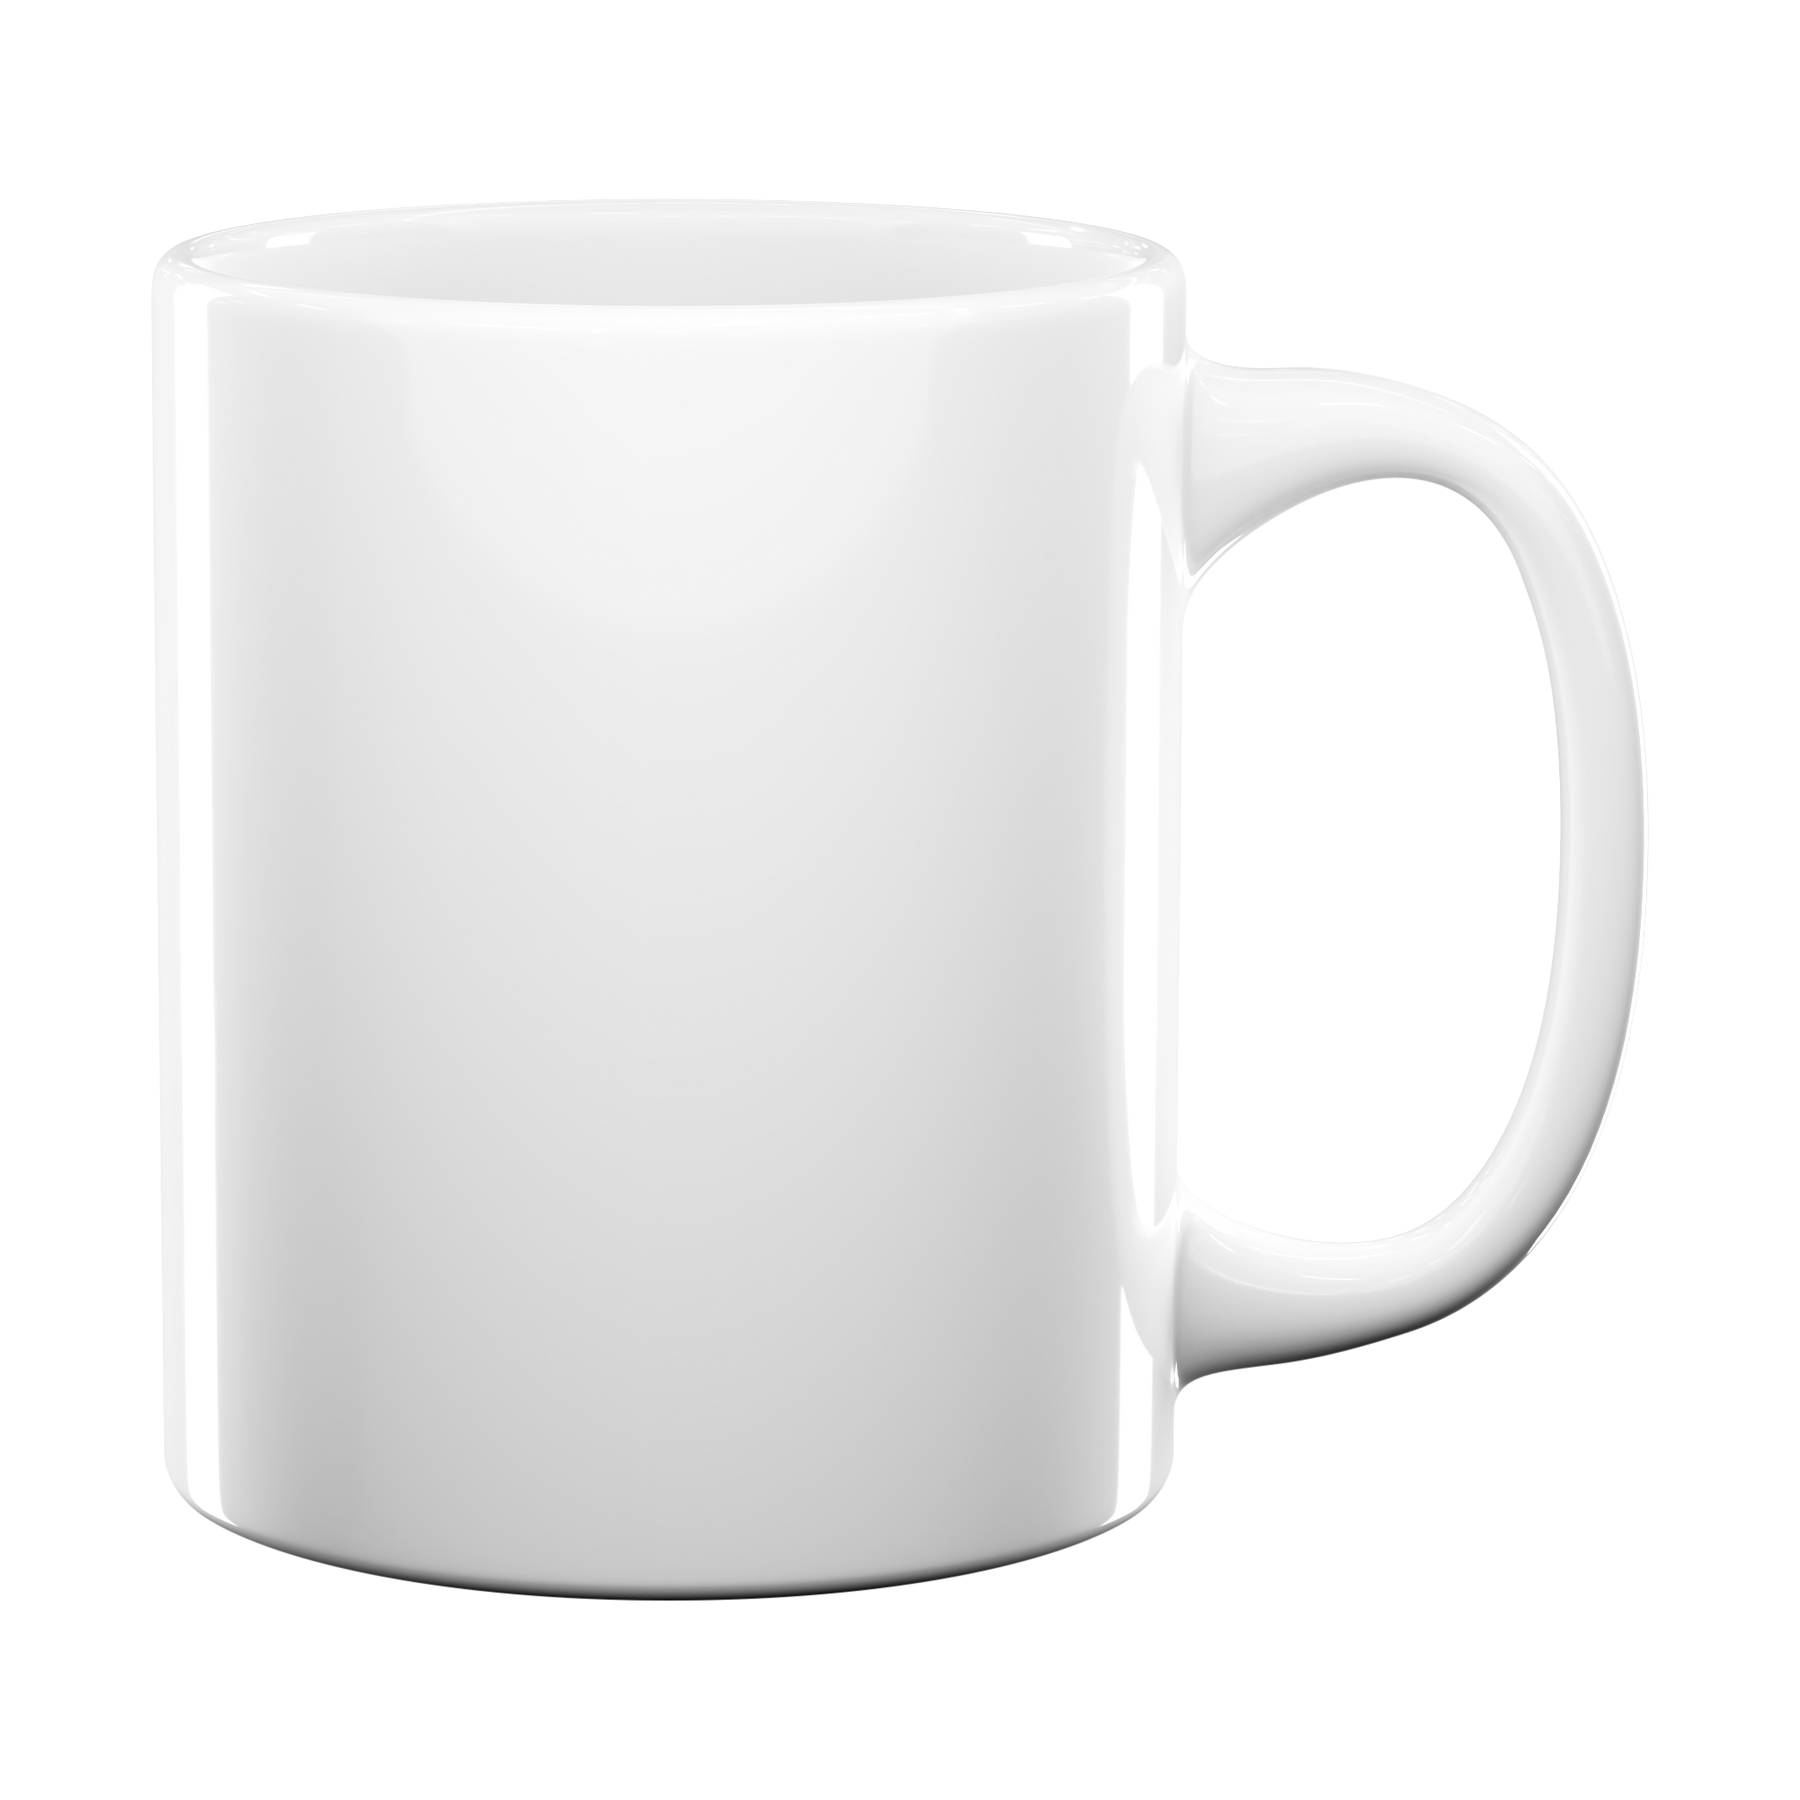 11 oz White Mug